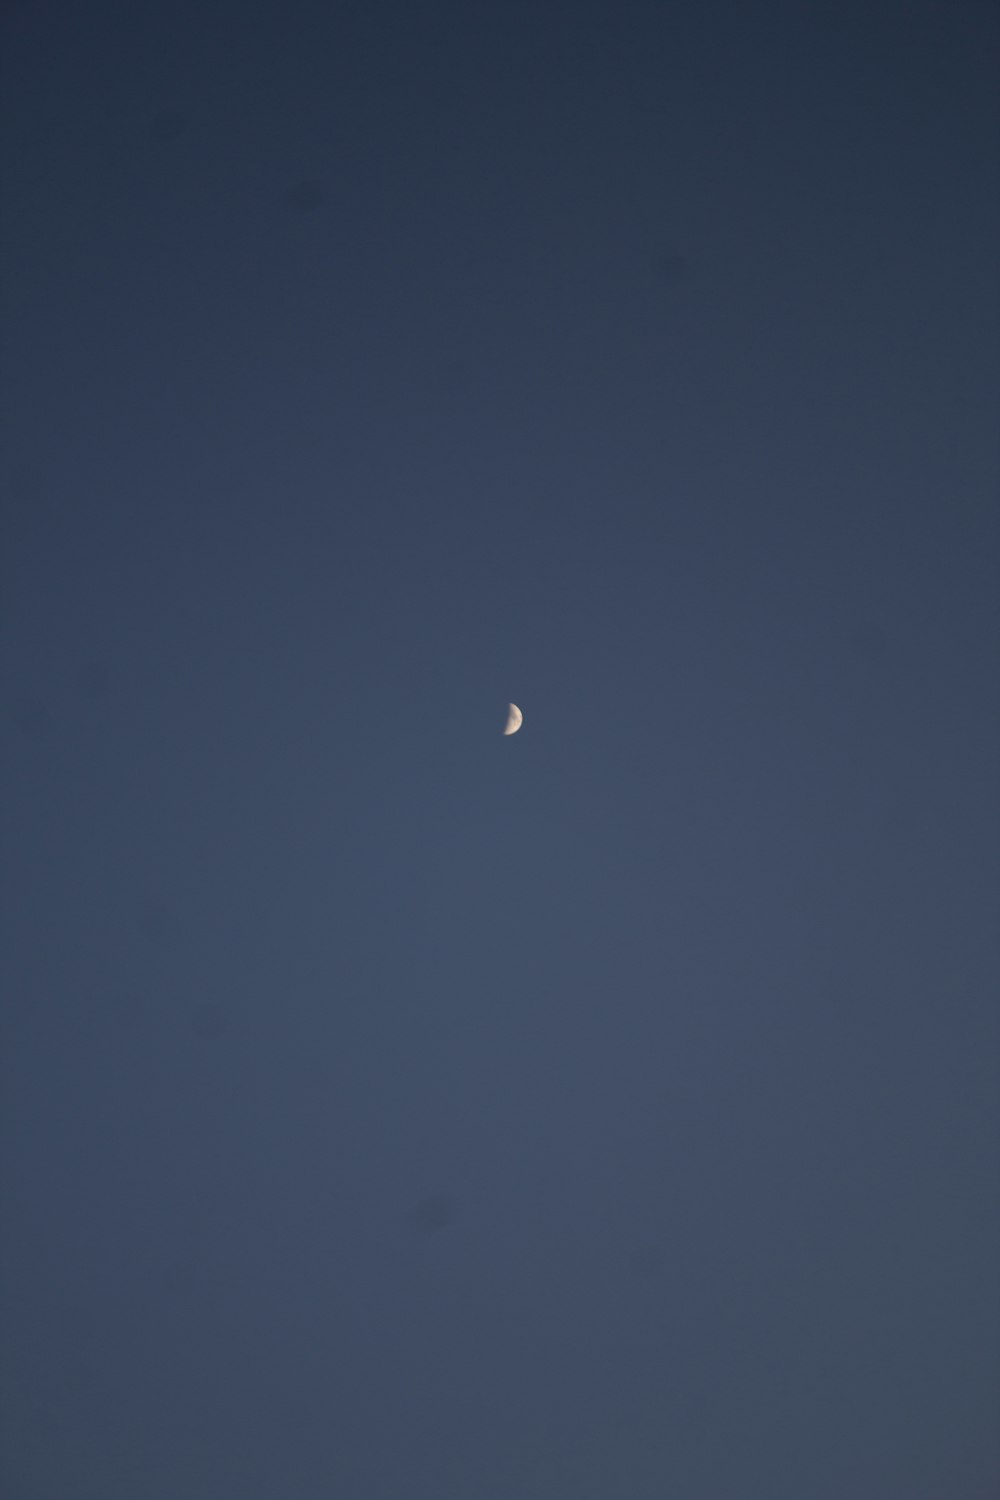 a half moon is seen in the night sky